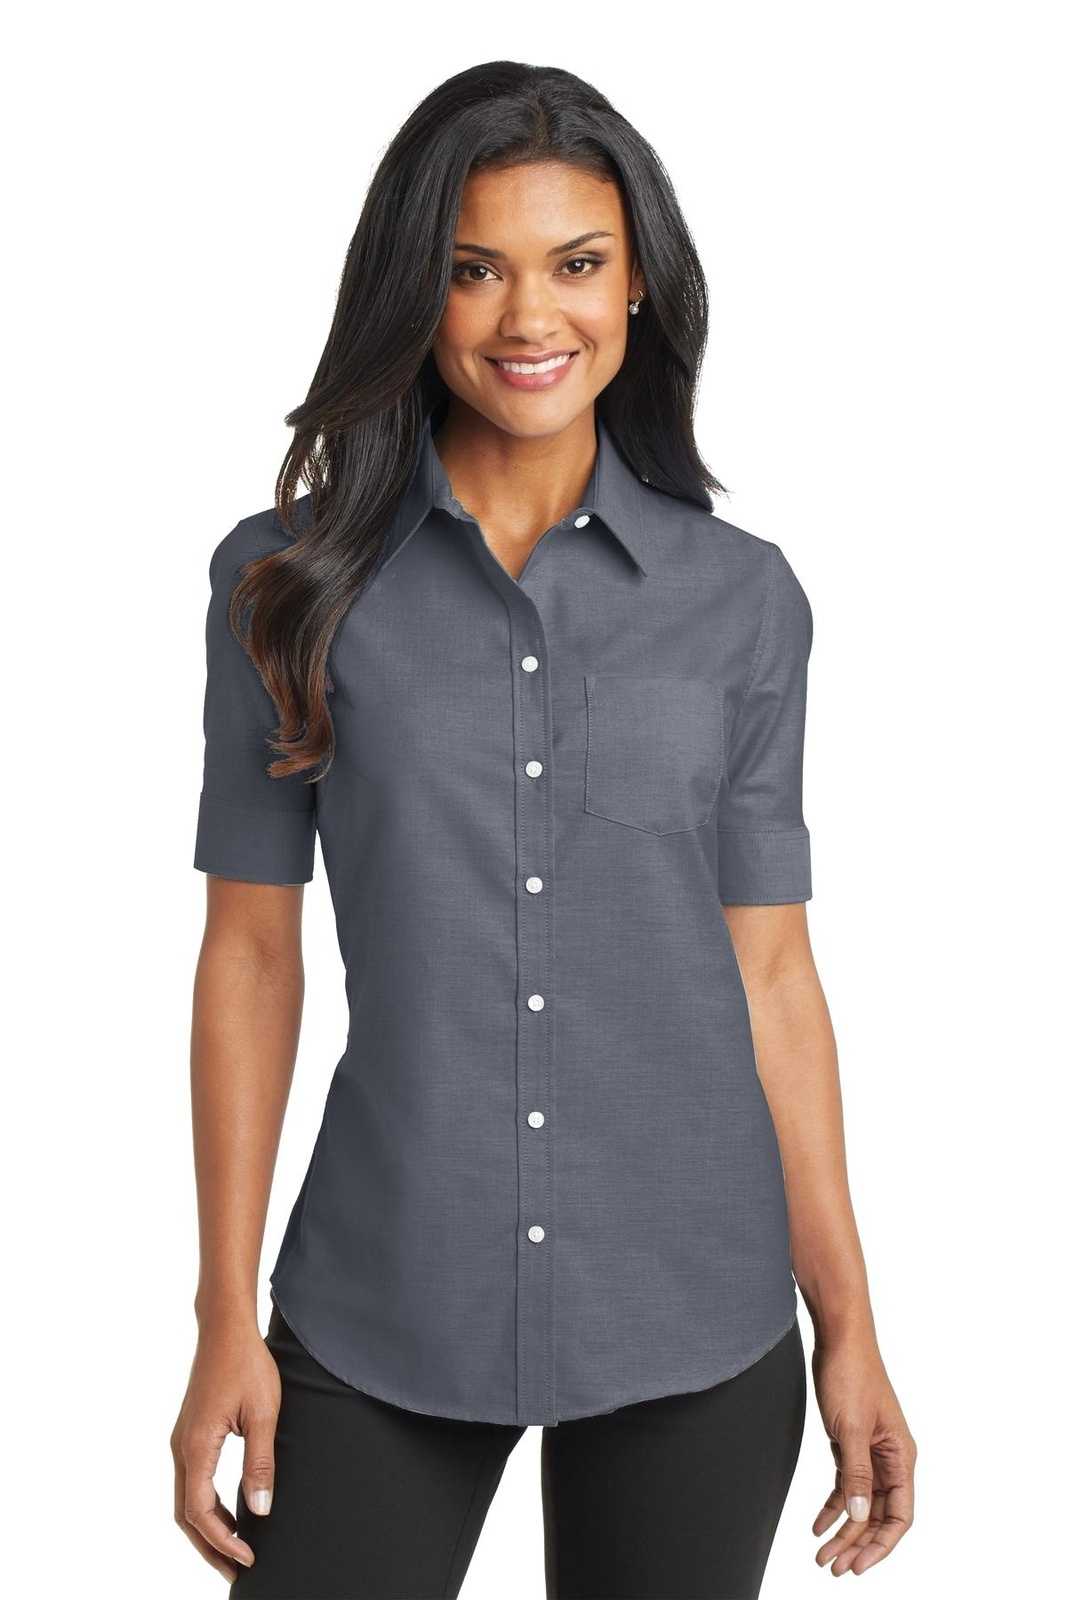 Port Authority L659 Ladies Short Sleeve Superpro Oxford Shirt - Black - HIT a Double - 1